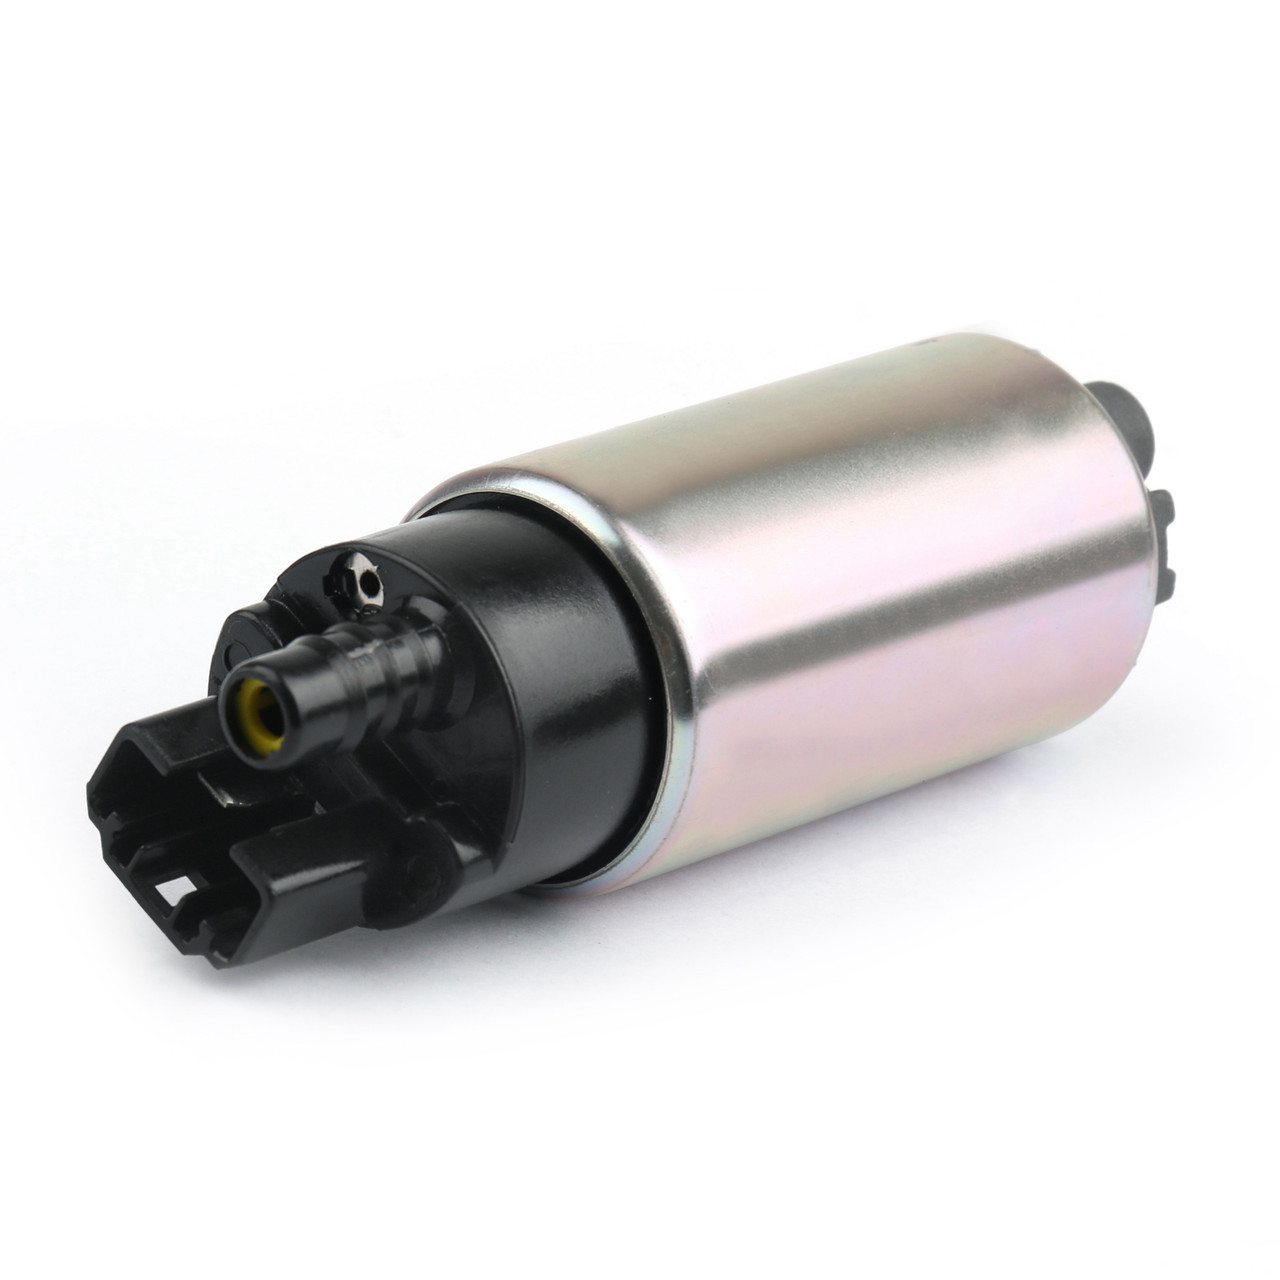 Fuel Pump For Honda CBR600 CBR600F 01-06 CBR600F4i 01-06 Silver